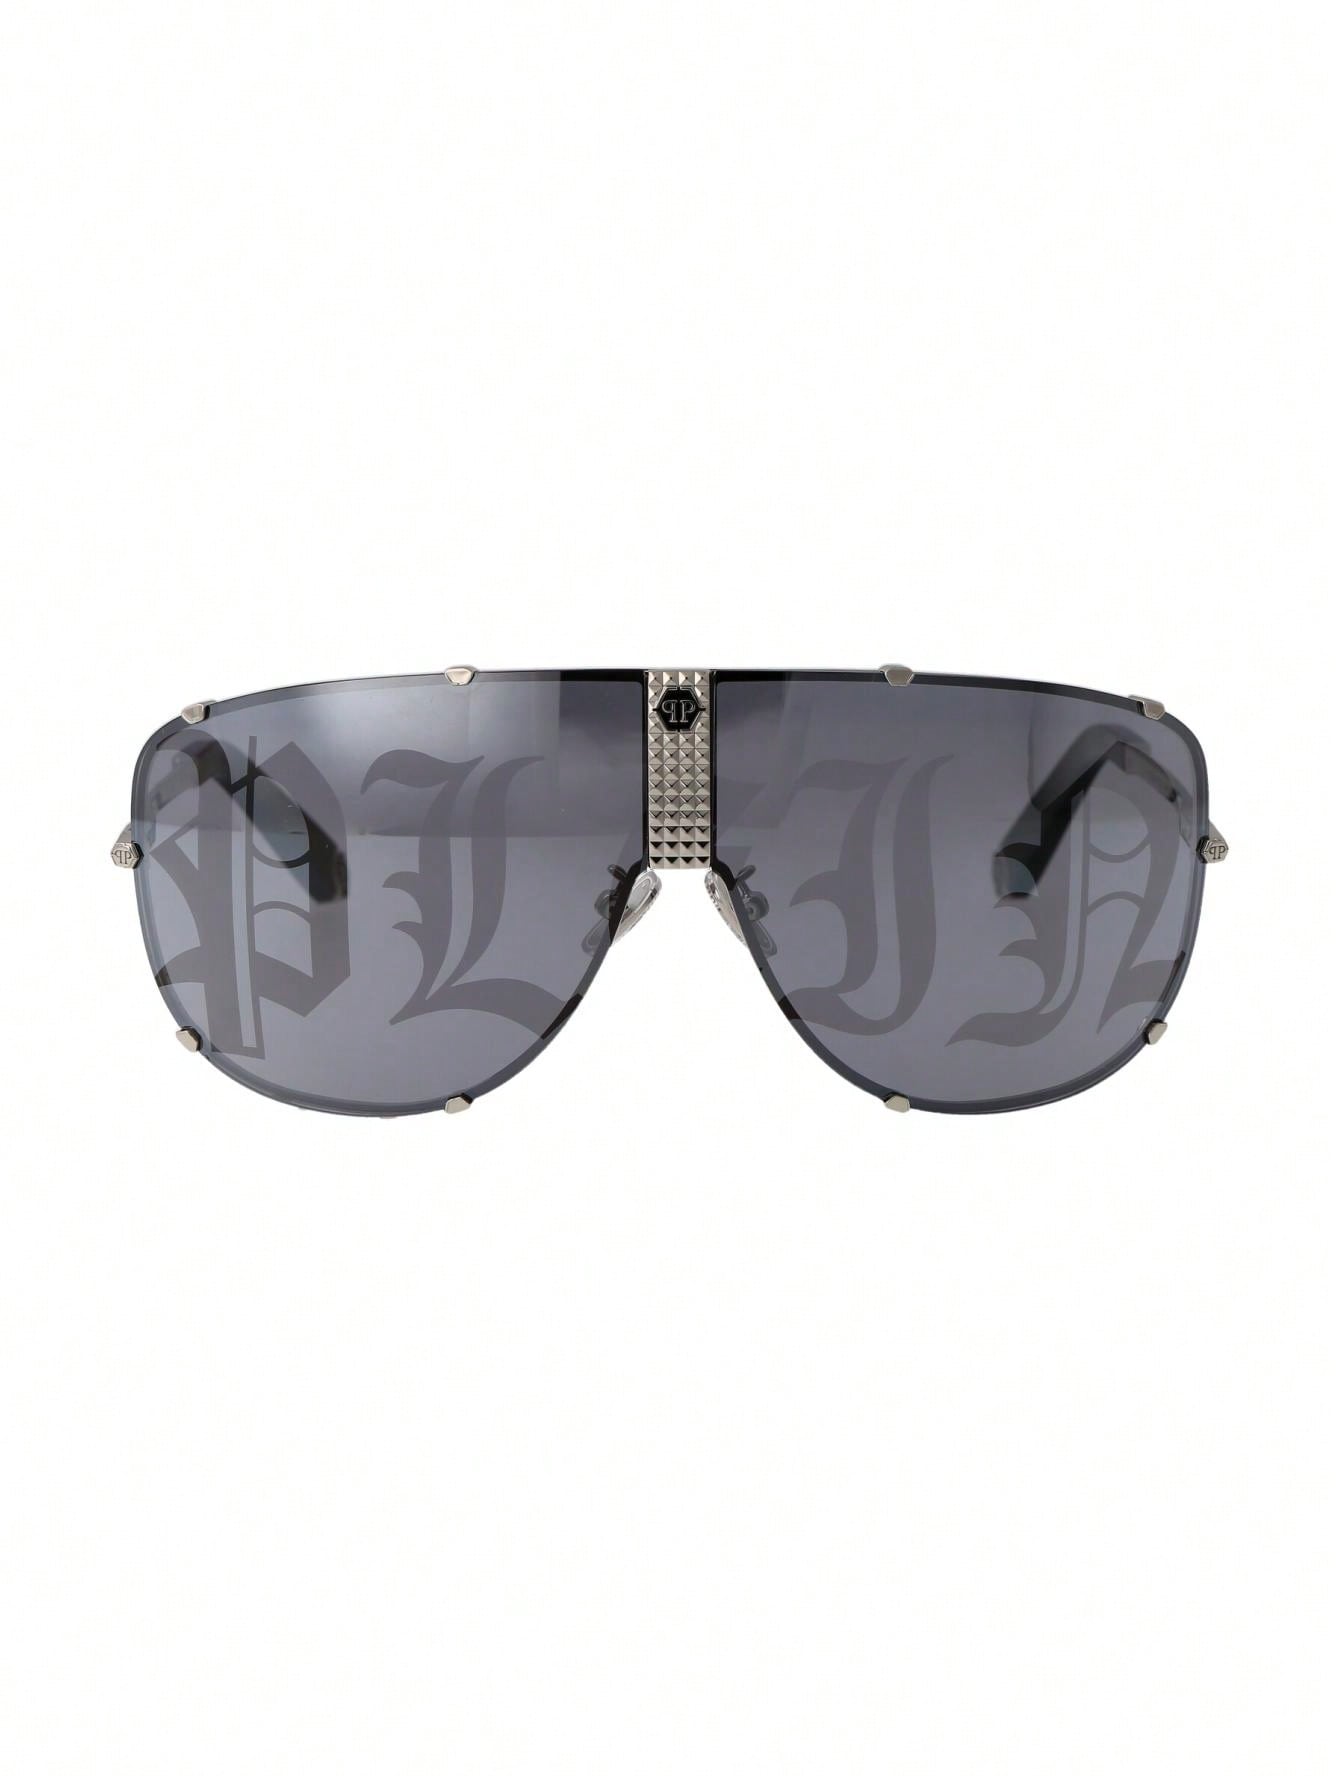 Мужские солнцезащитные очки Philipp Plein DECOR SPP075M579L, многоцветный солнцезащитные очки philipp plein 006m 890x